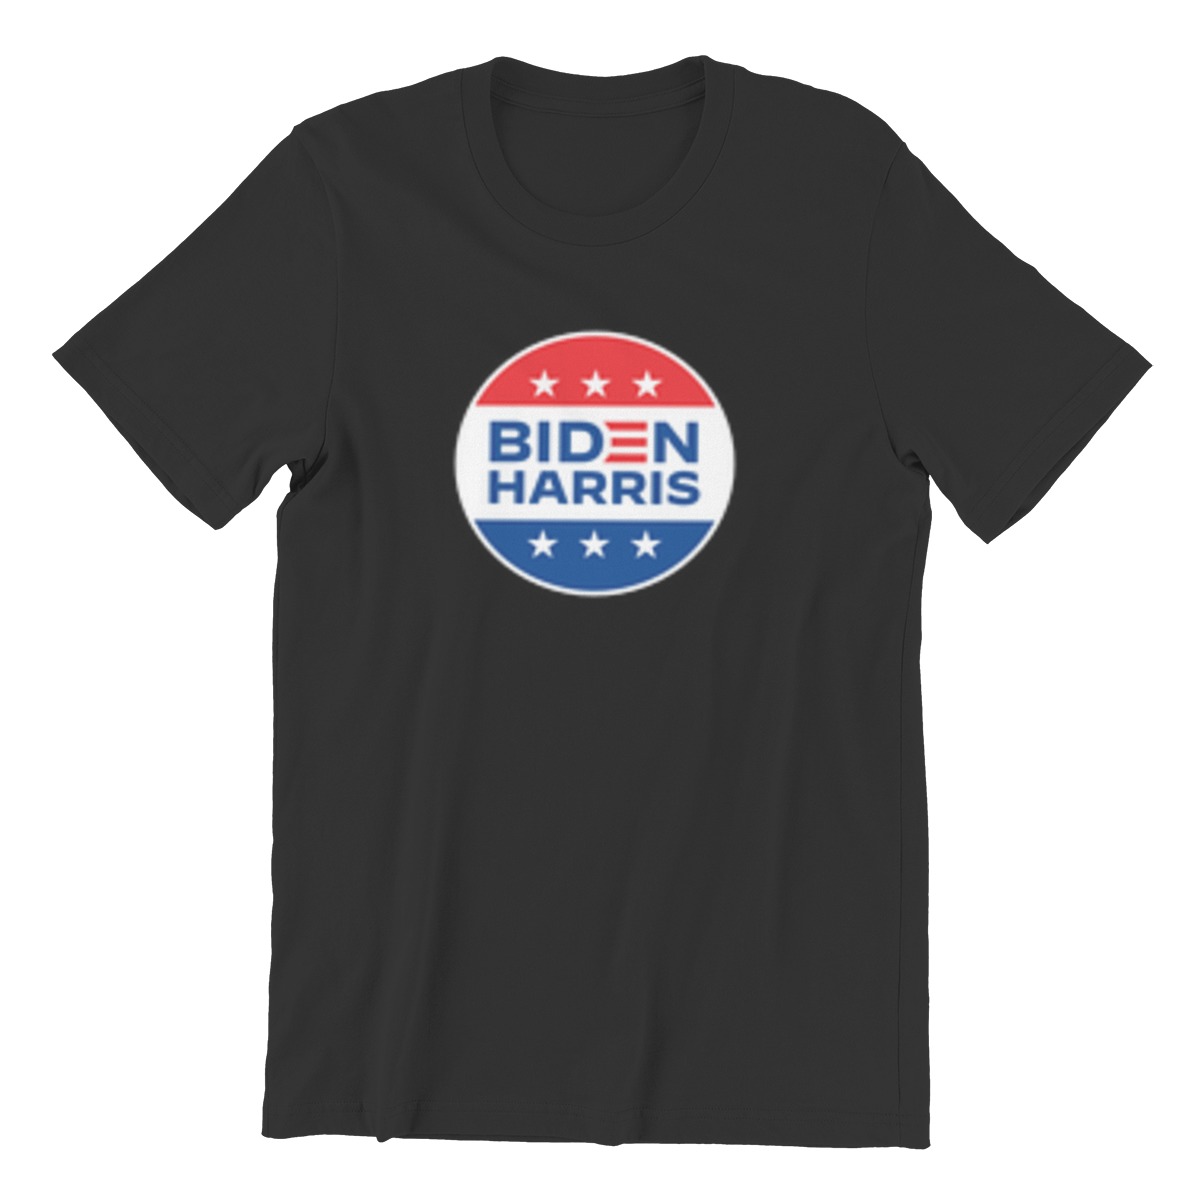 atinfor Biden Harris Tee Men's T Shirt Novelty Tops Bitumen Bike Life Tees Clothes Cotton Printed T-Shirt Plus Size